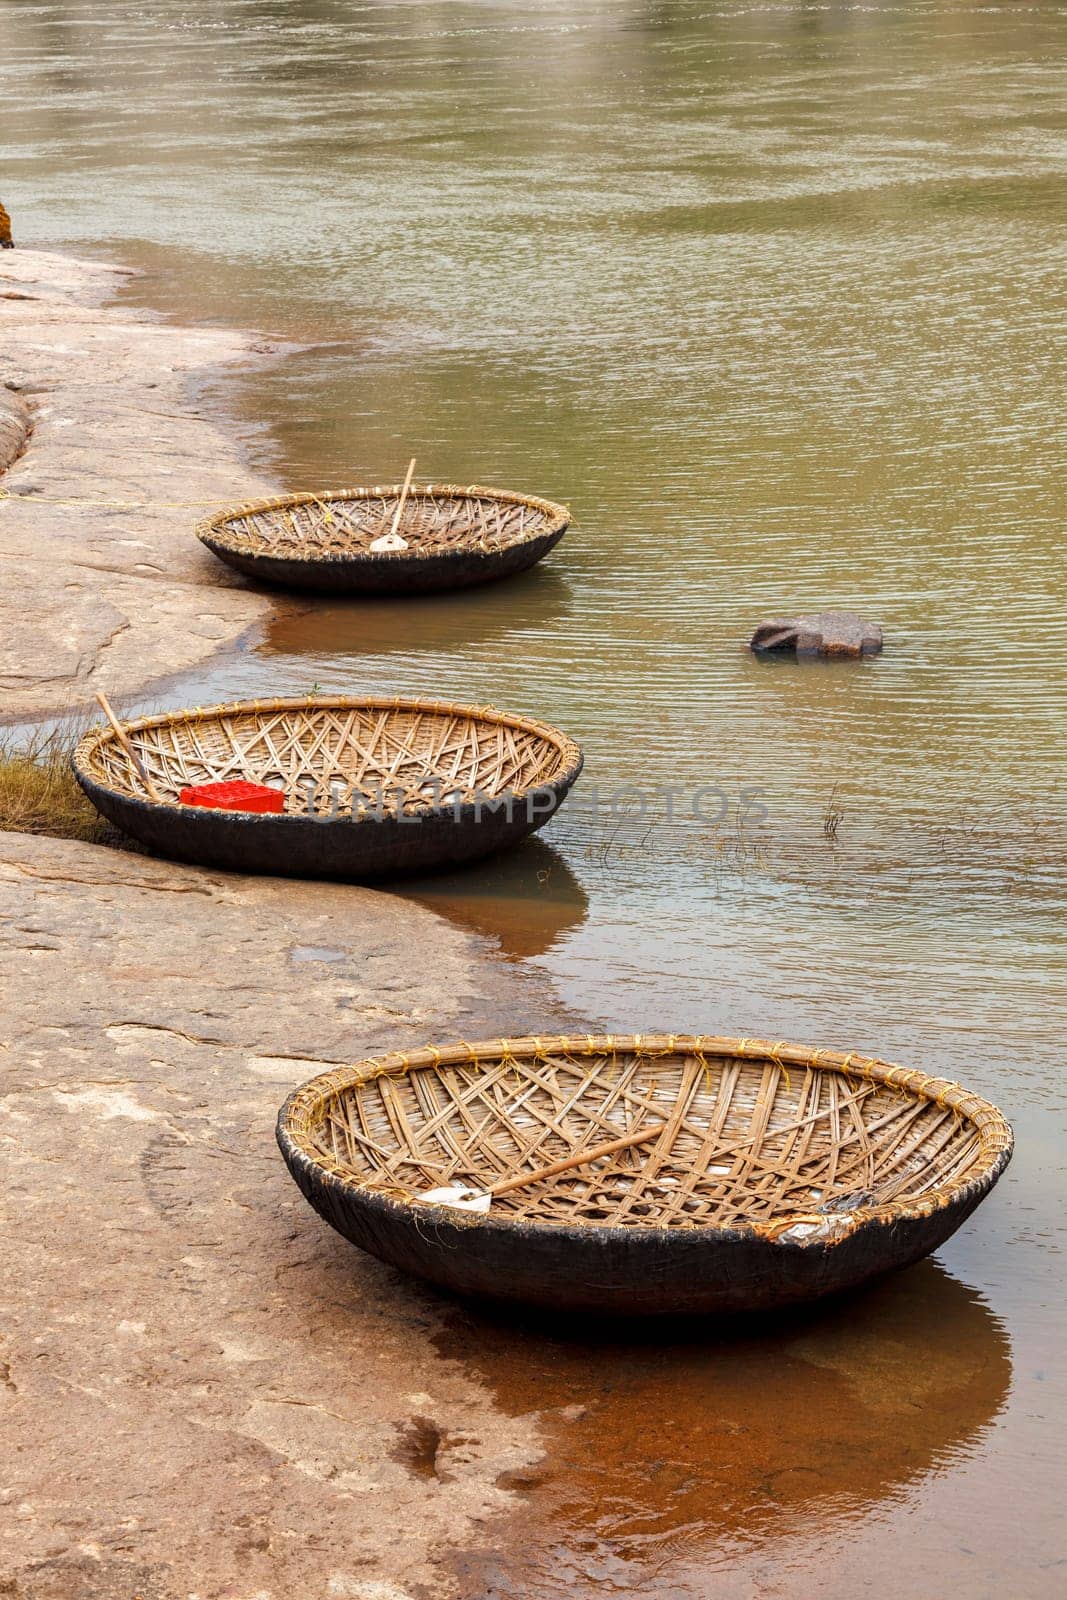 Wickerwork coracle boat in Hampi, Karnataka, India by dimol